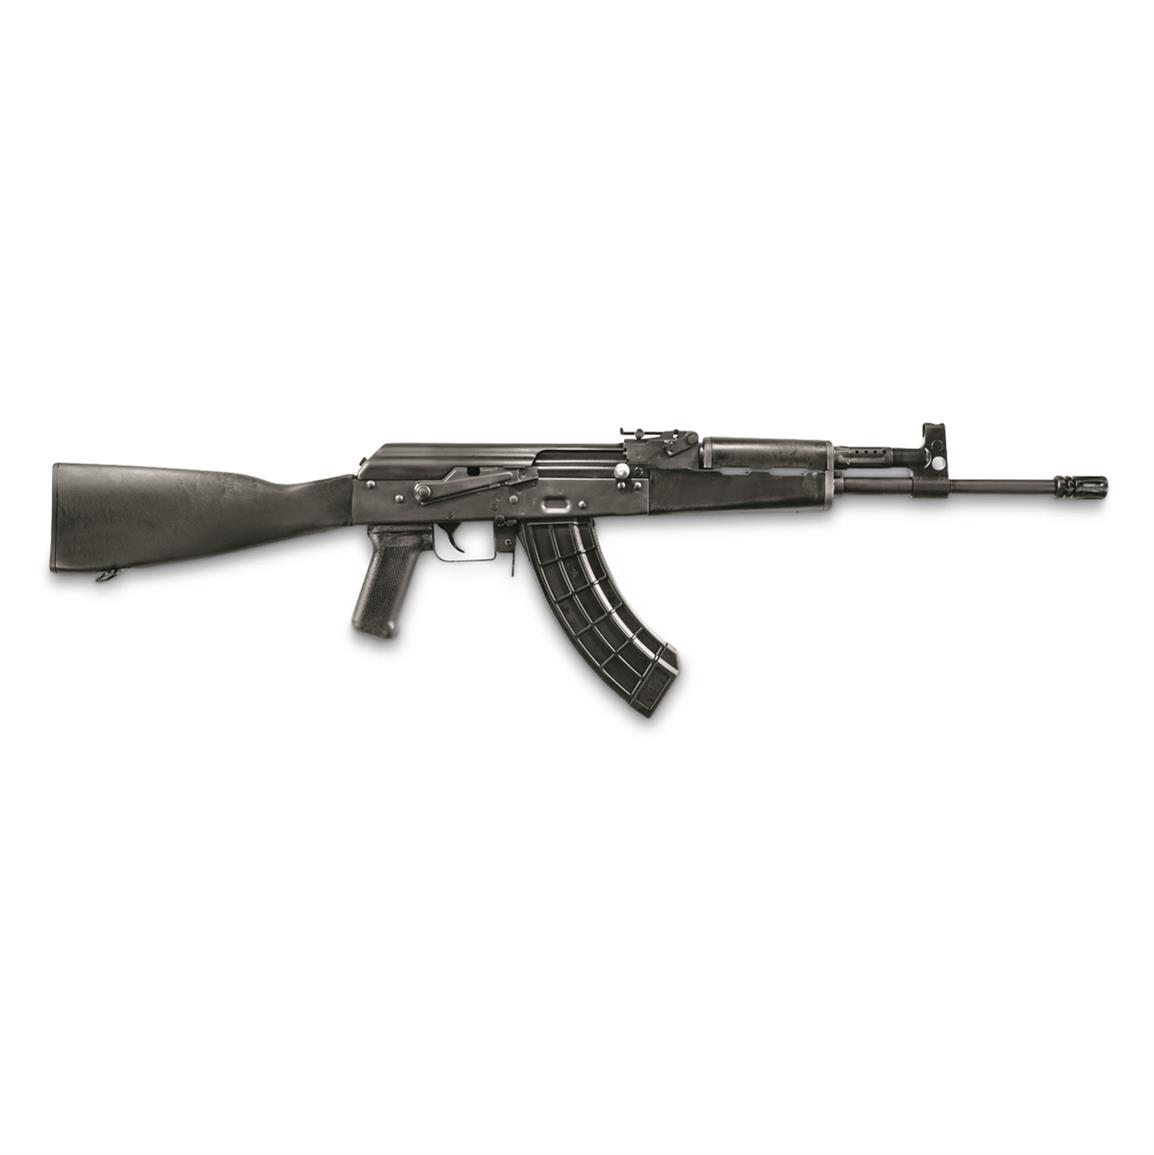 Century Arms VSKA AK, Semi-automatic, 7.62x39mm, 16.5" Barrel, 30+1 Rounds